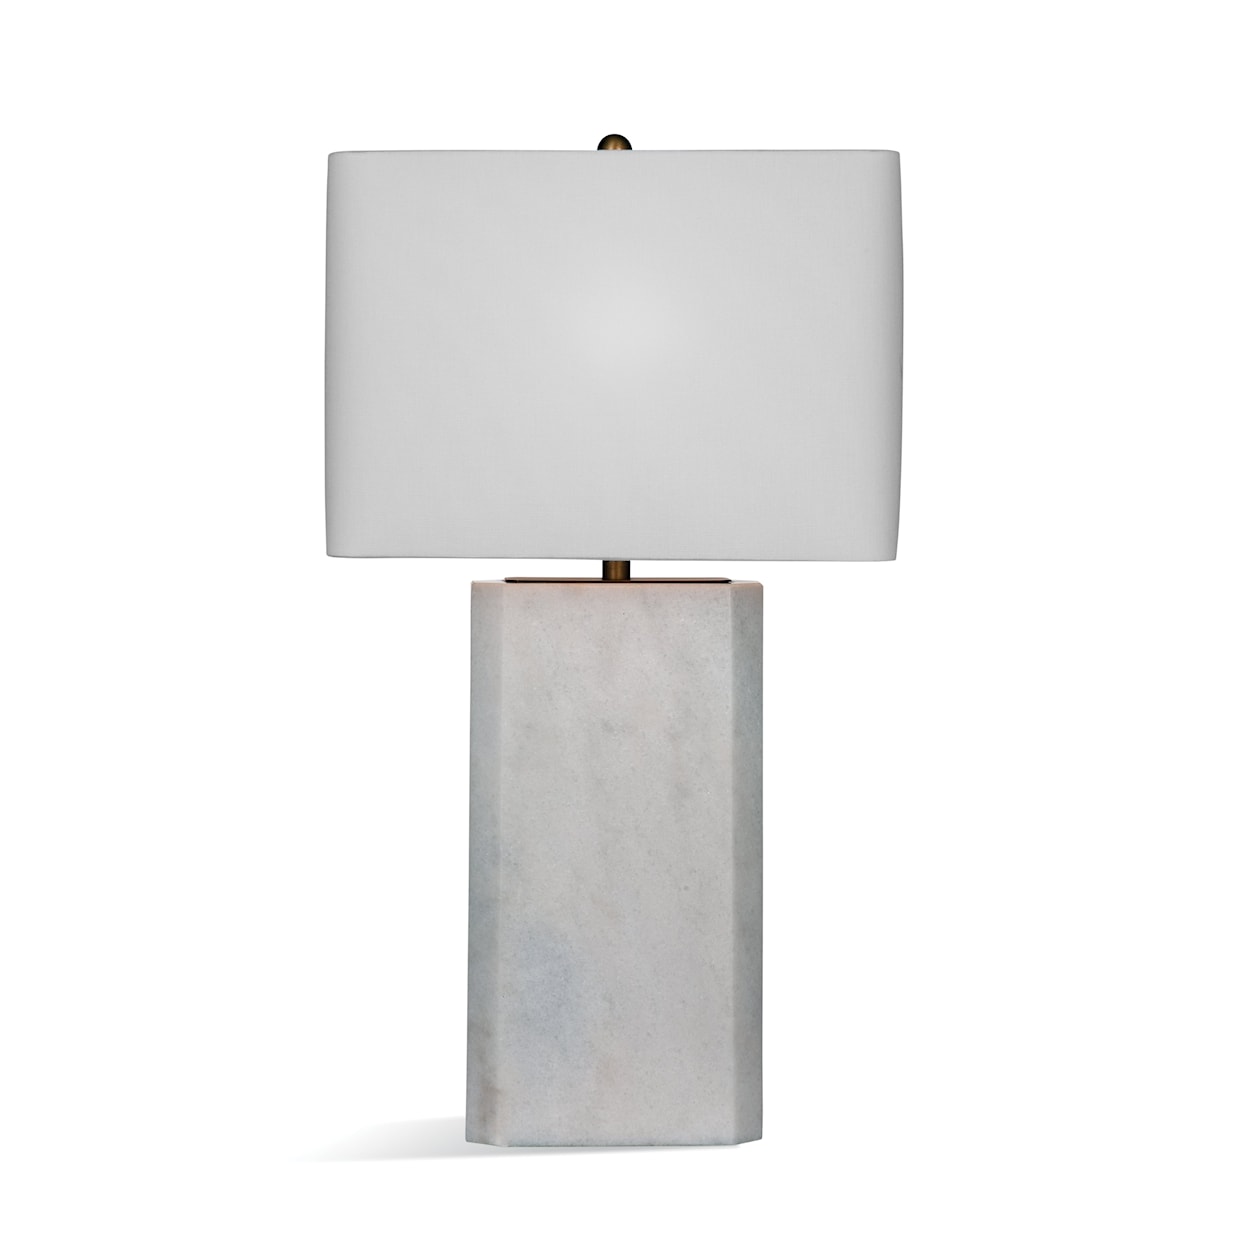 Bassett Mirror Table Lamps Sundree Table Lamp